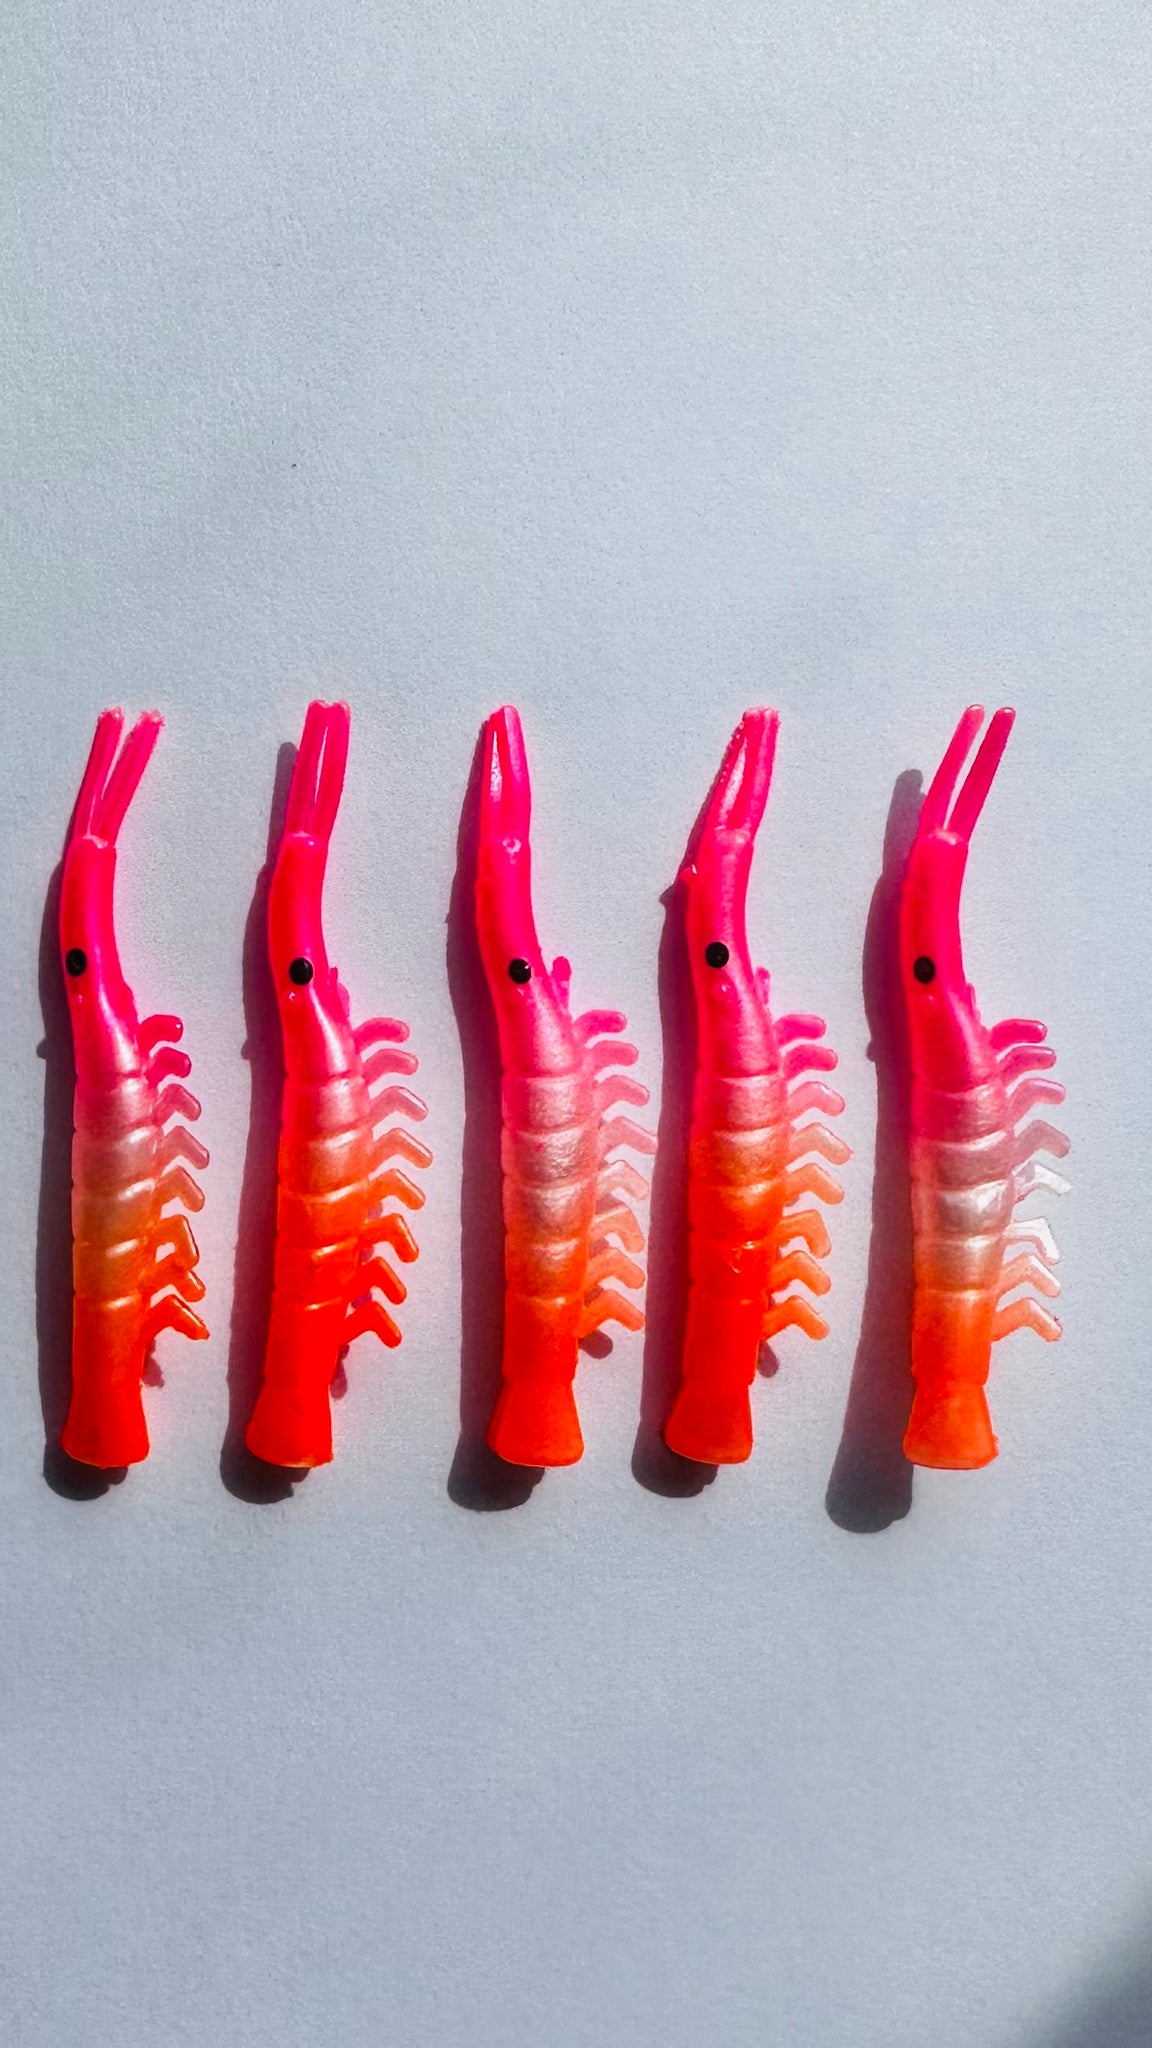 Shrimp - UV Dyed Kokanee Shrimp (5-pack) #8 pink/white/orange